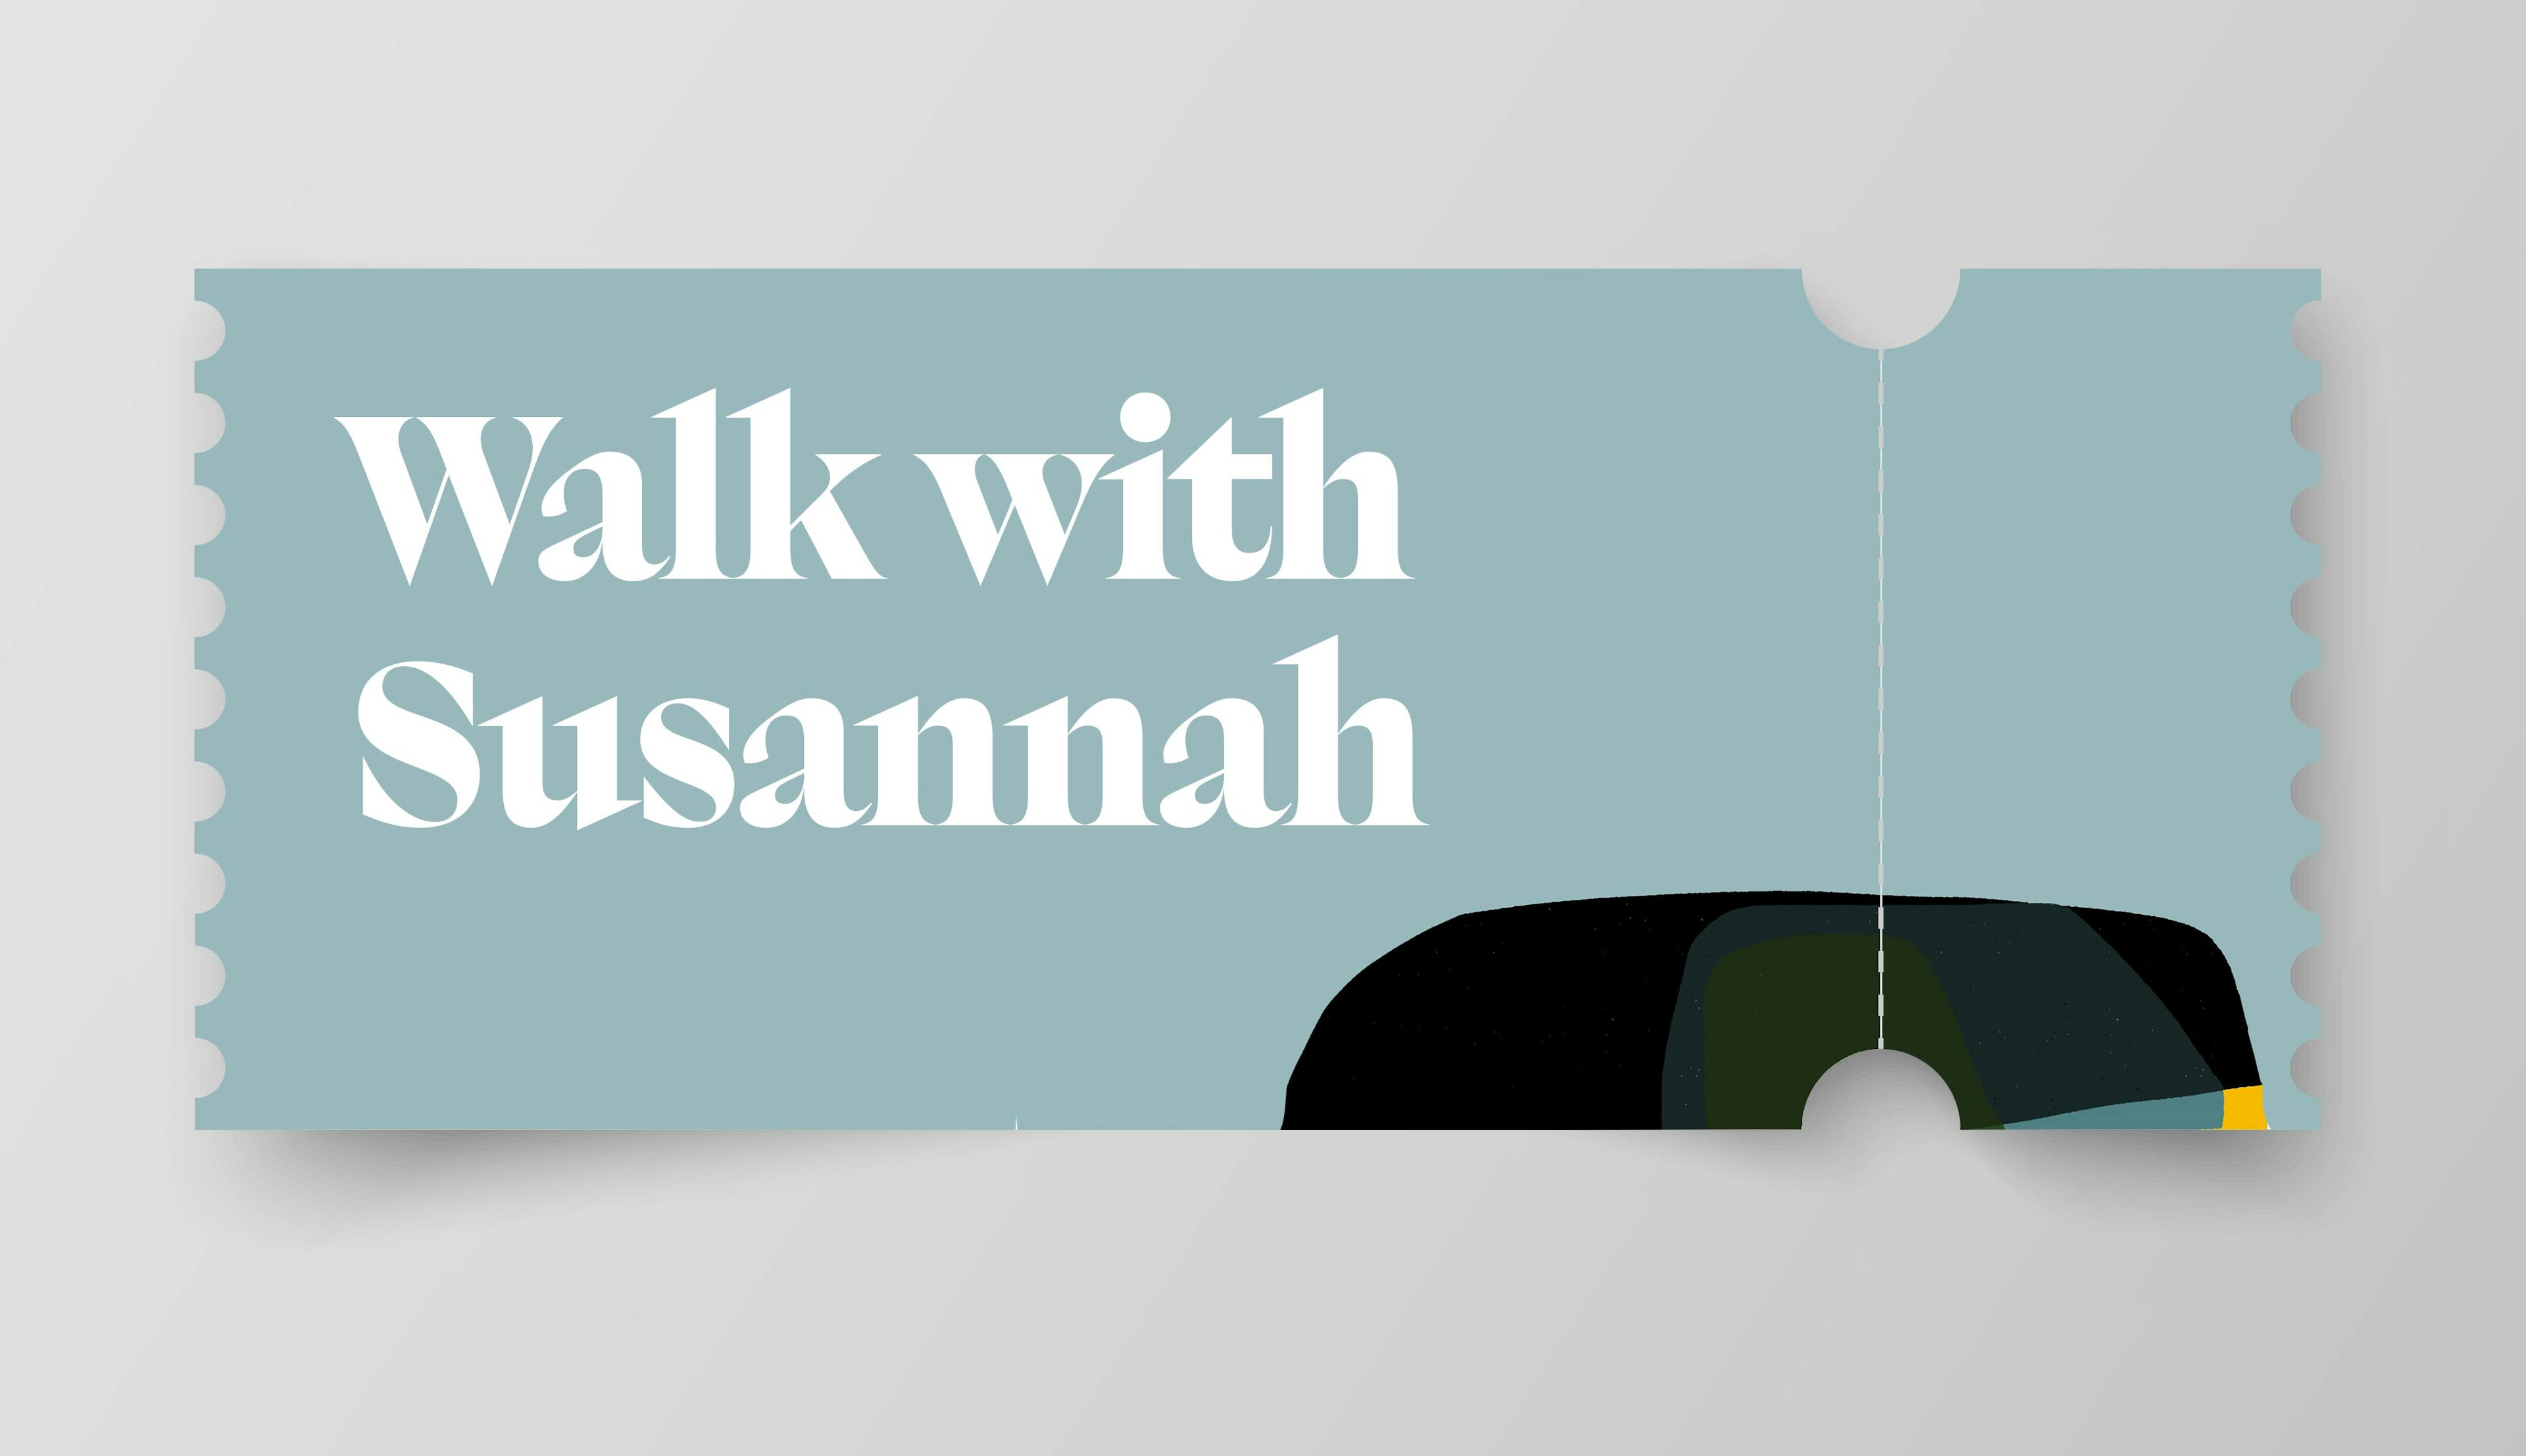 Walk with Susannah